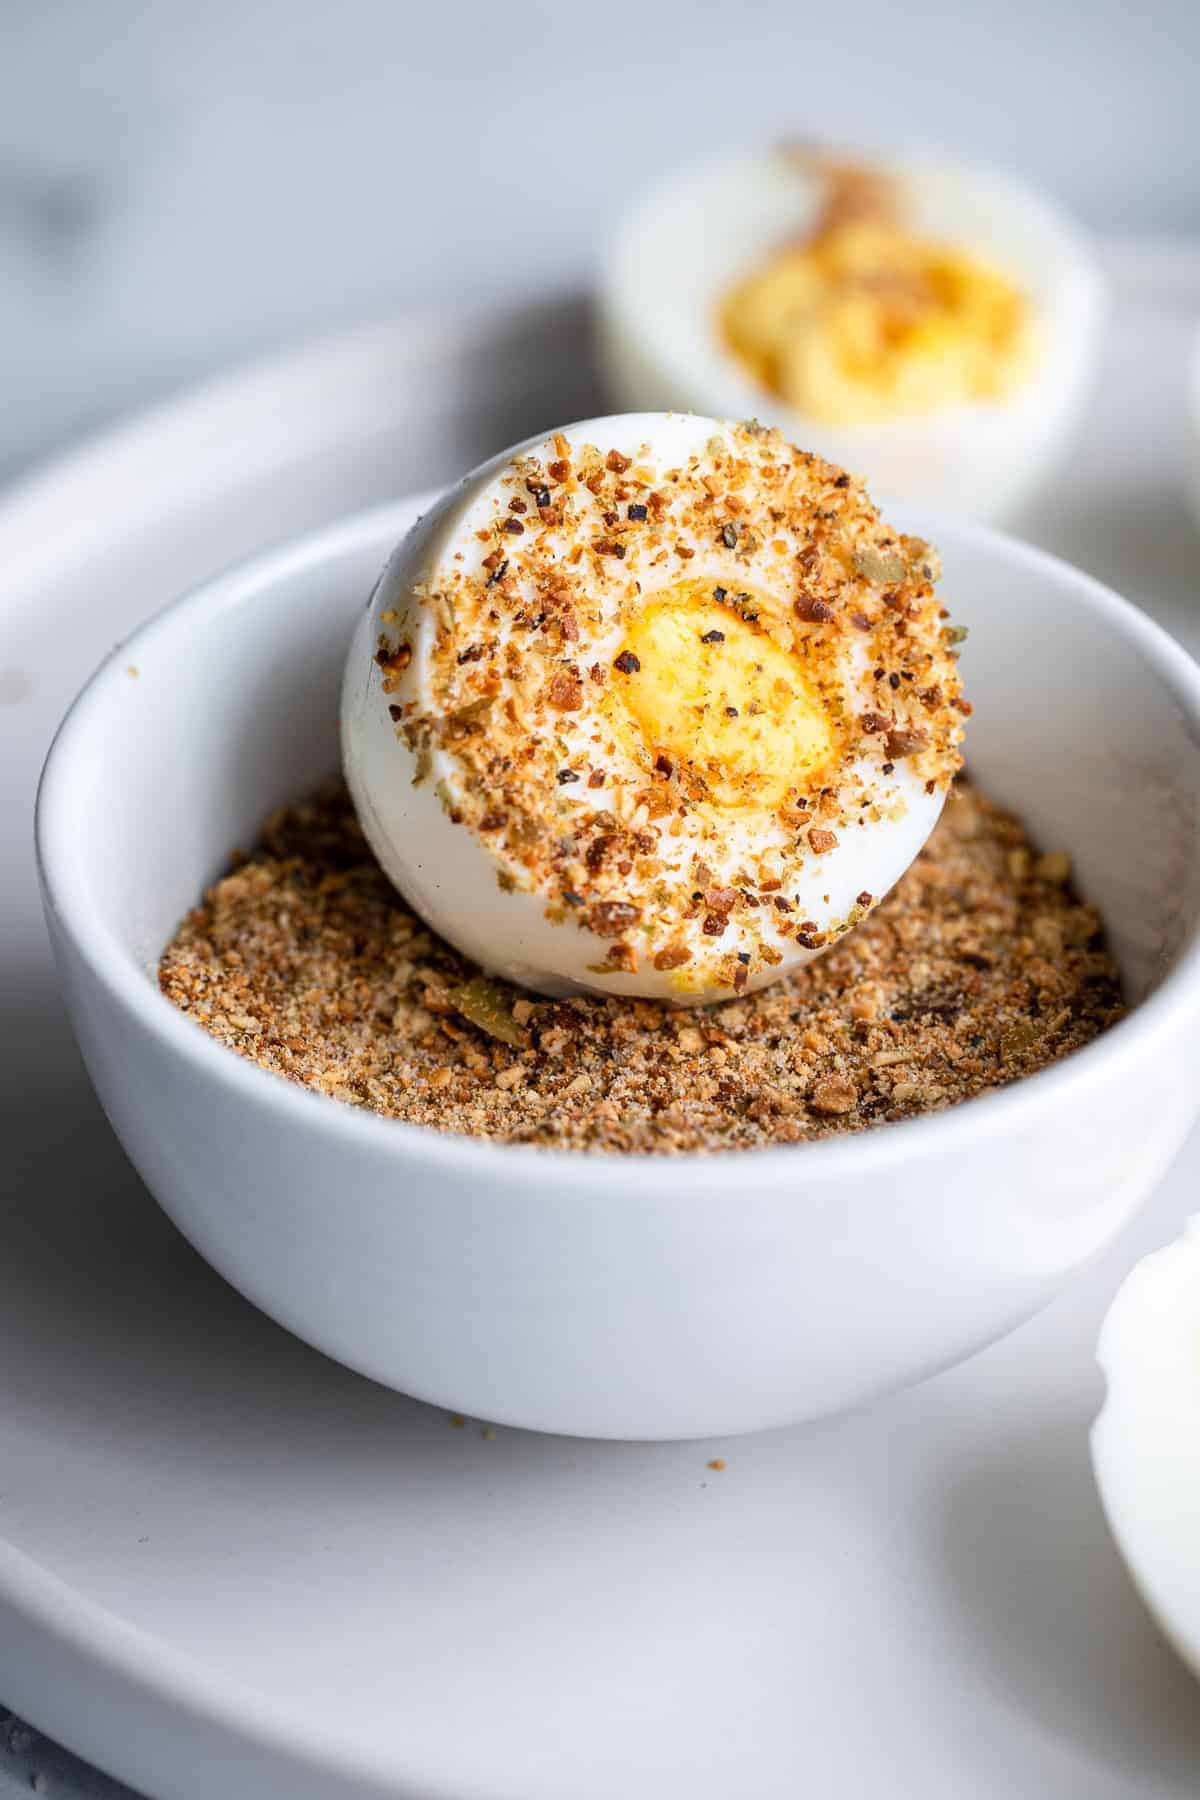 https://www.foodfaithfitness.com/wp-content/uploads/2019/10/hard-boiled-egg-snack-ingredients-photography.jpg